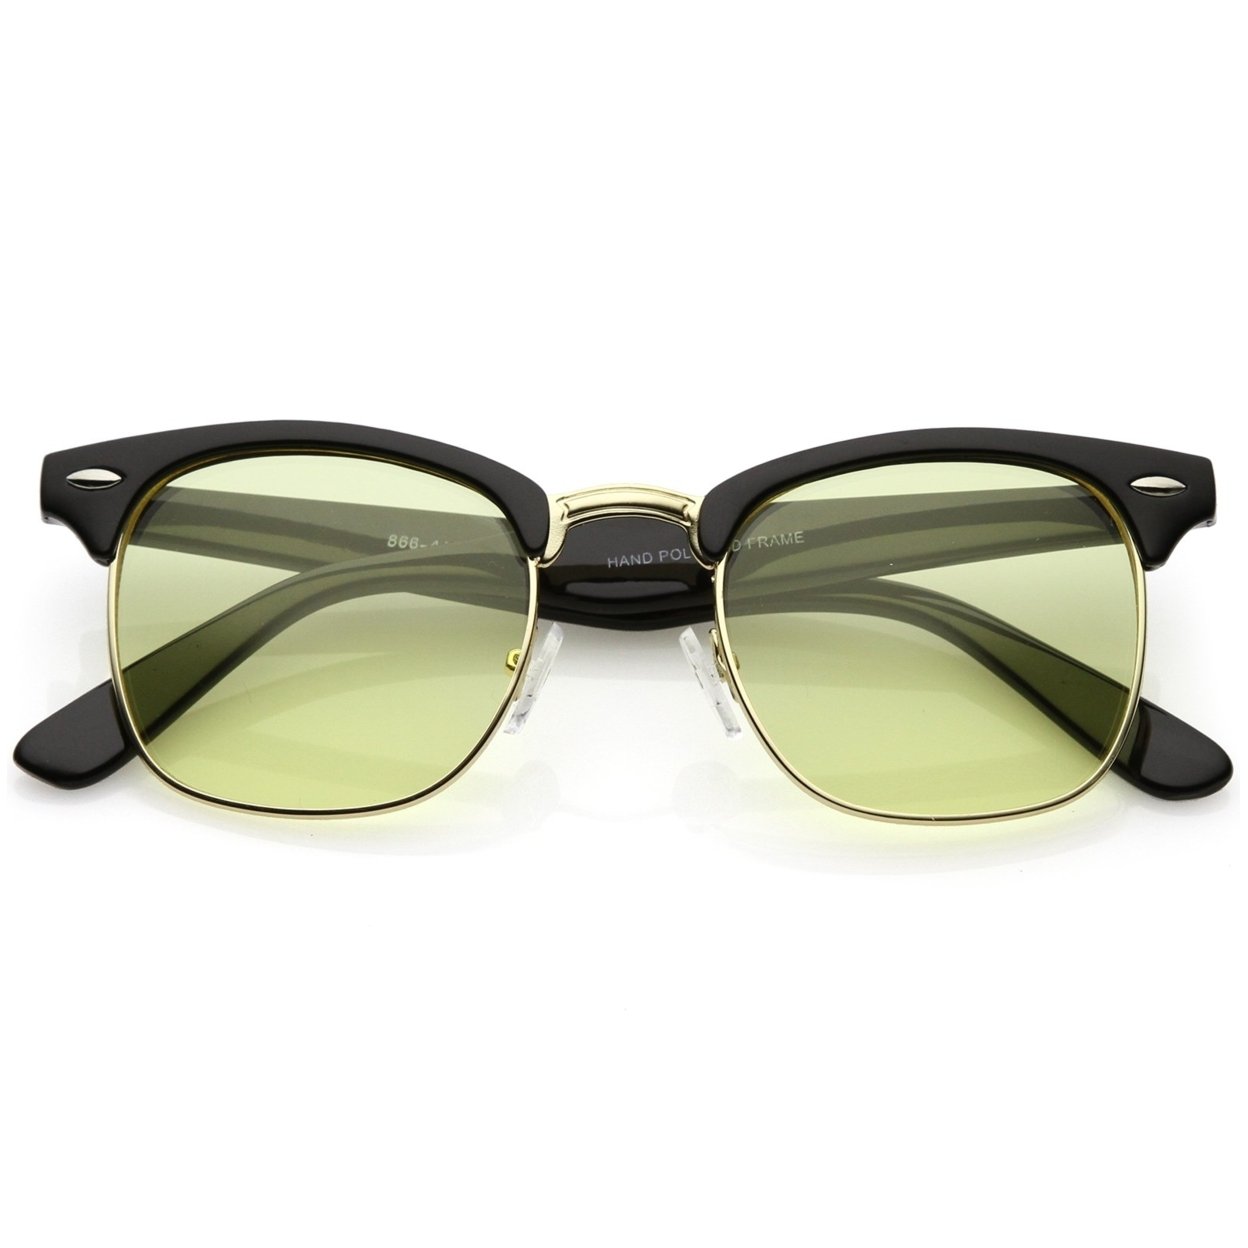 Modern Horn Rimmed Sunglasses Semi Rimless Color Tinted Square Lens 49mm - Black Gold / Green